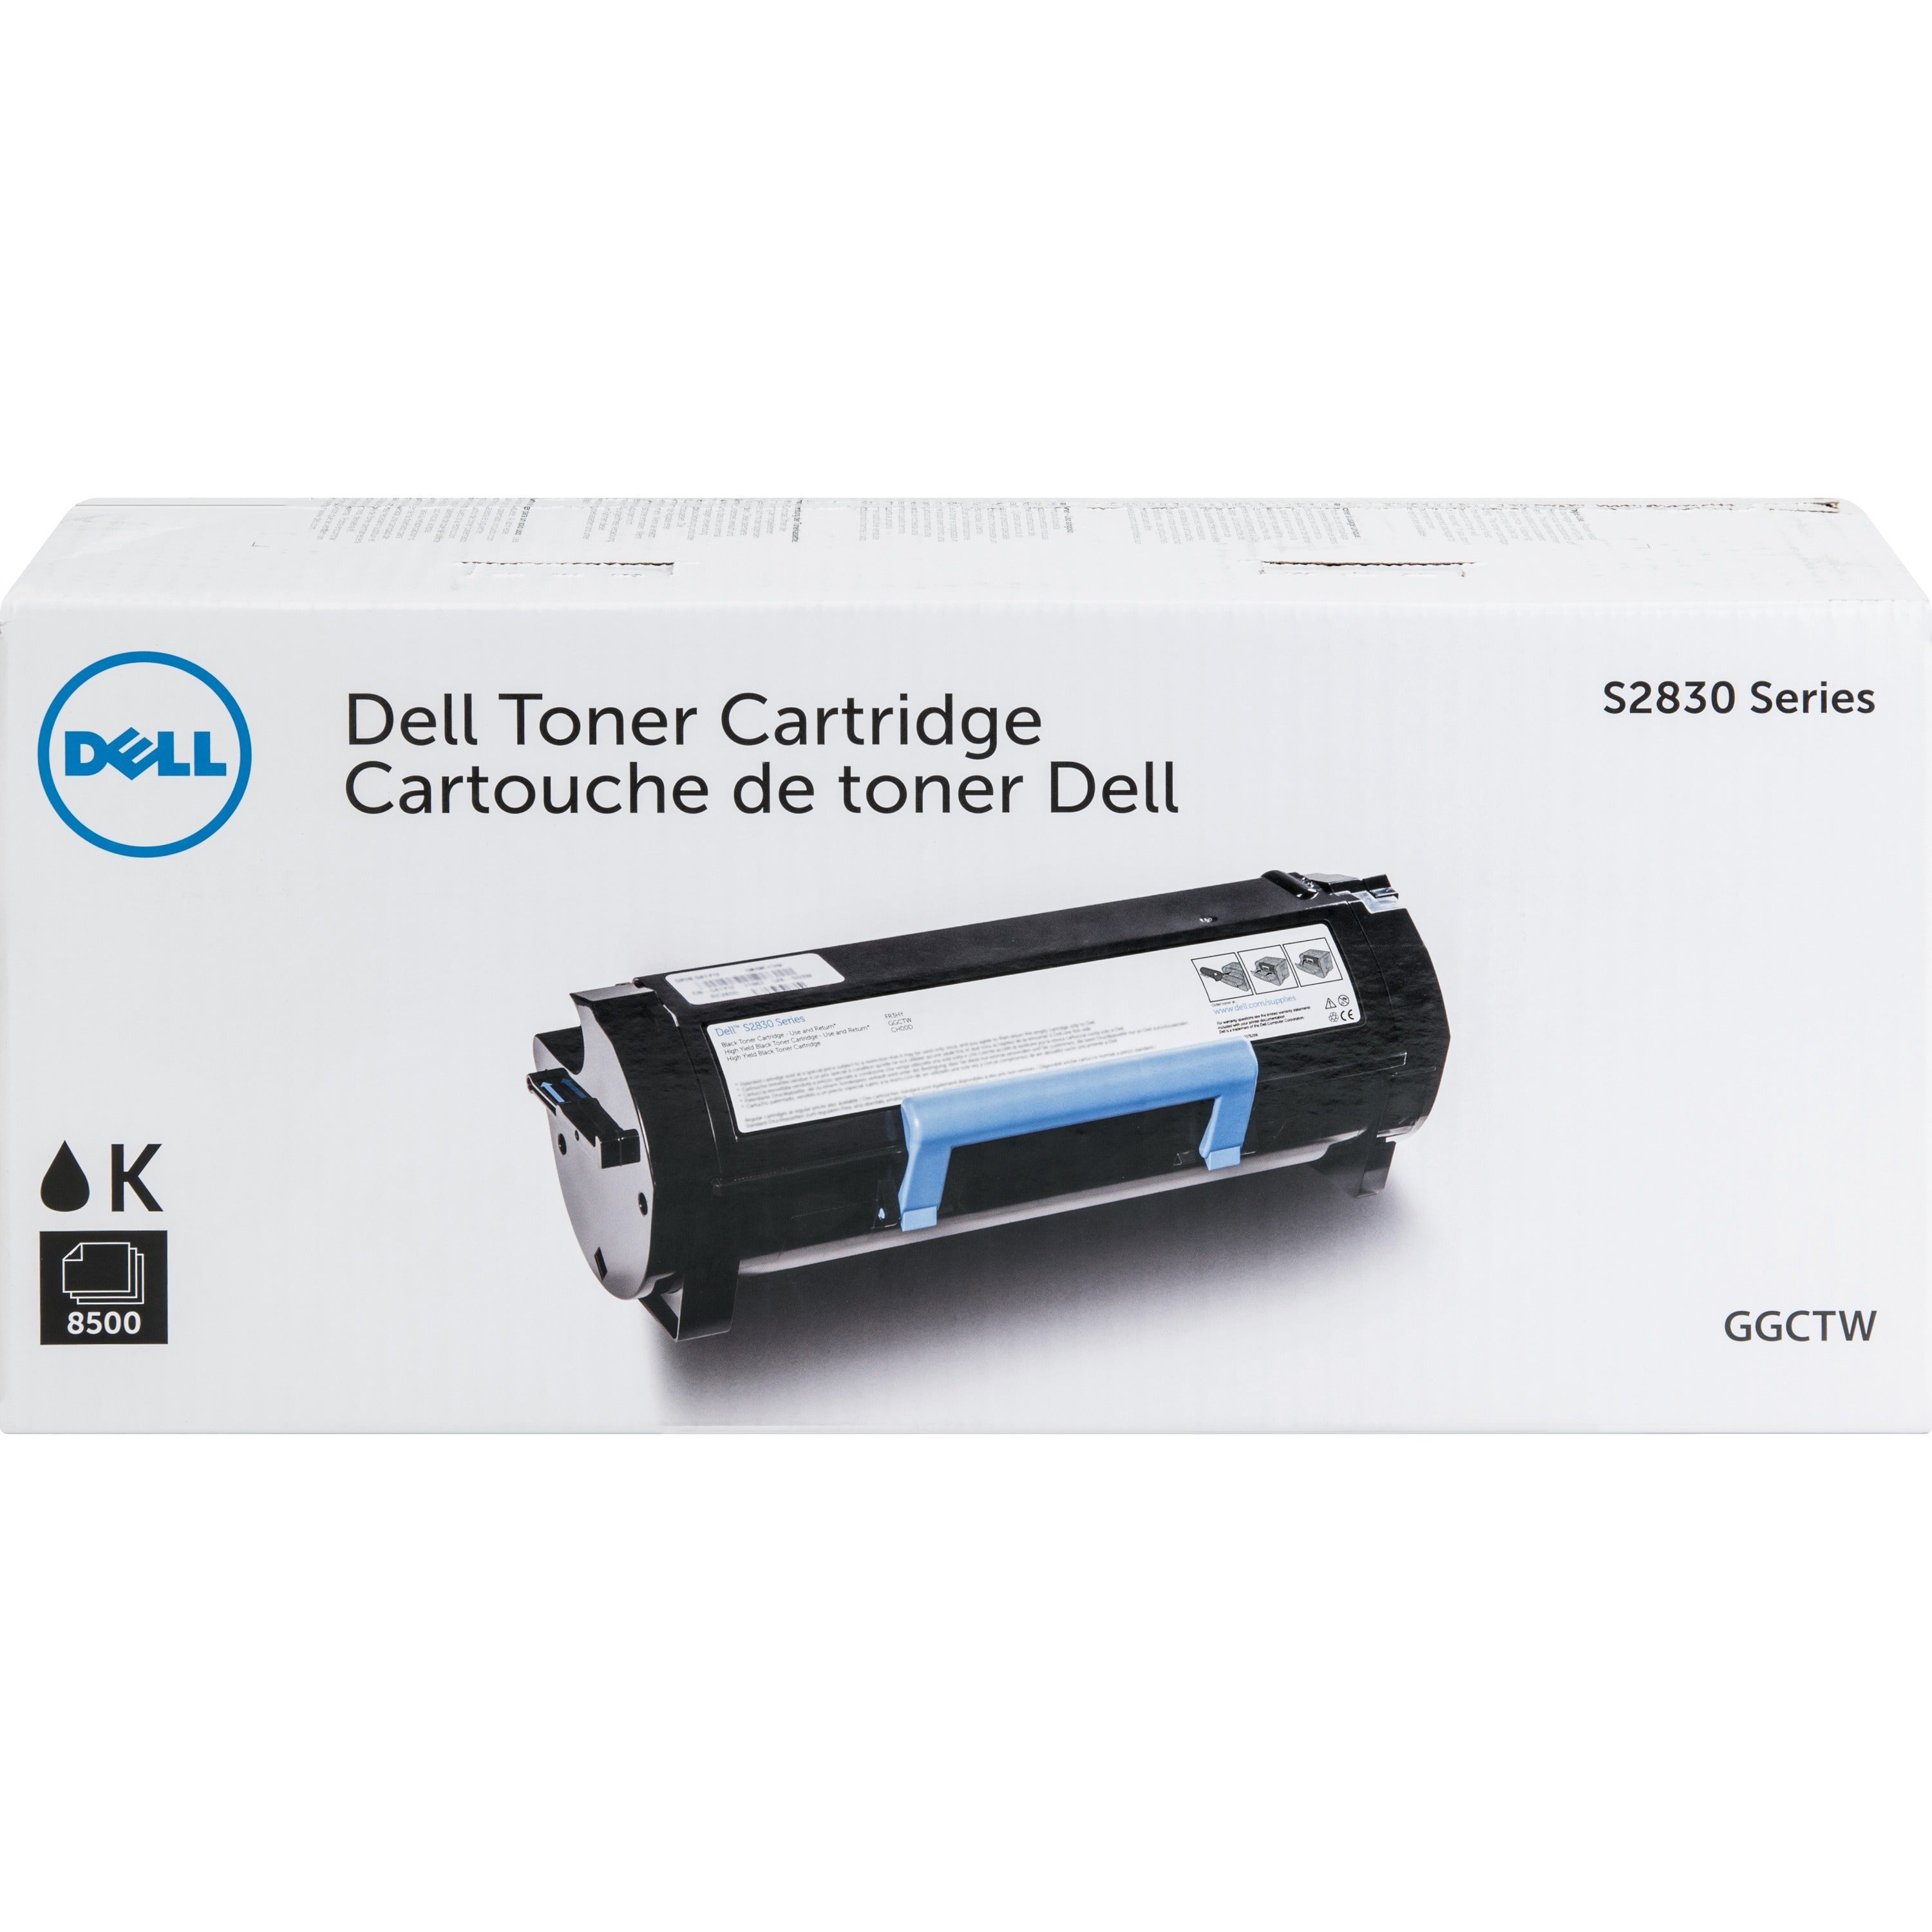 dell-original-high-yield-laser-toner-cartridge-black-1-each-8500-pages_dllggctw - 1